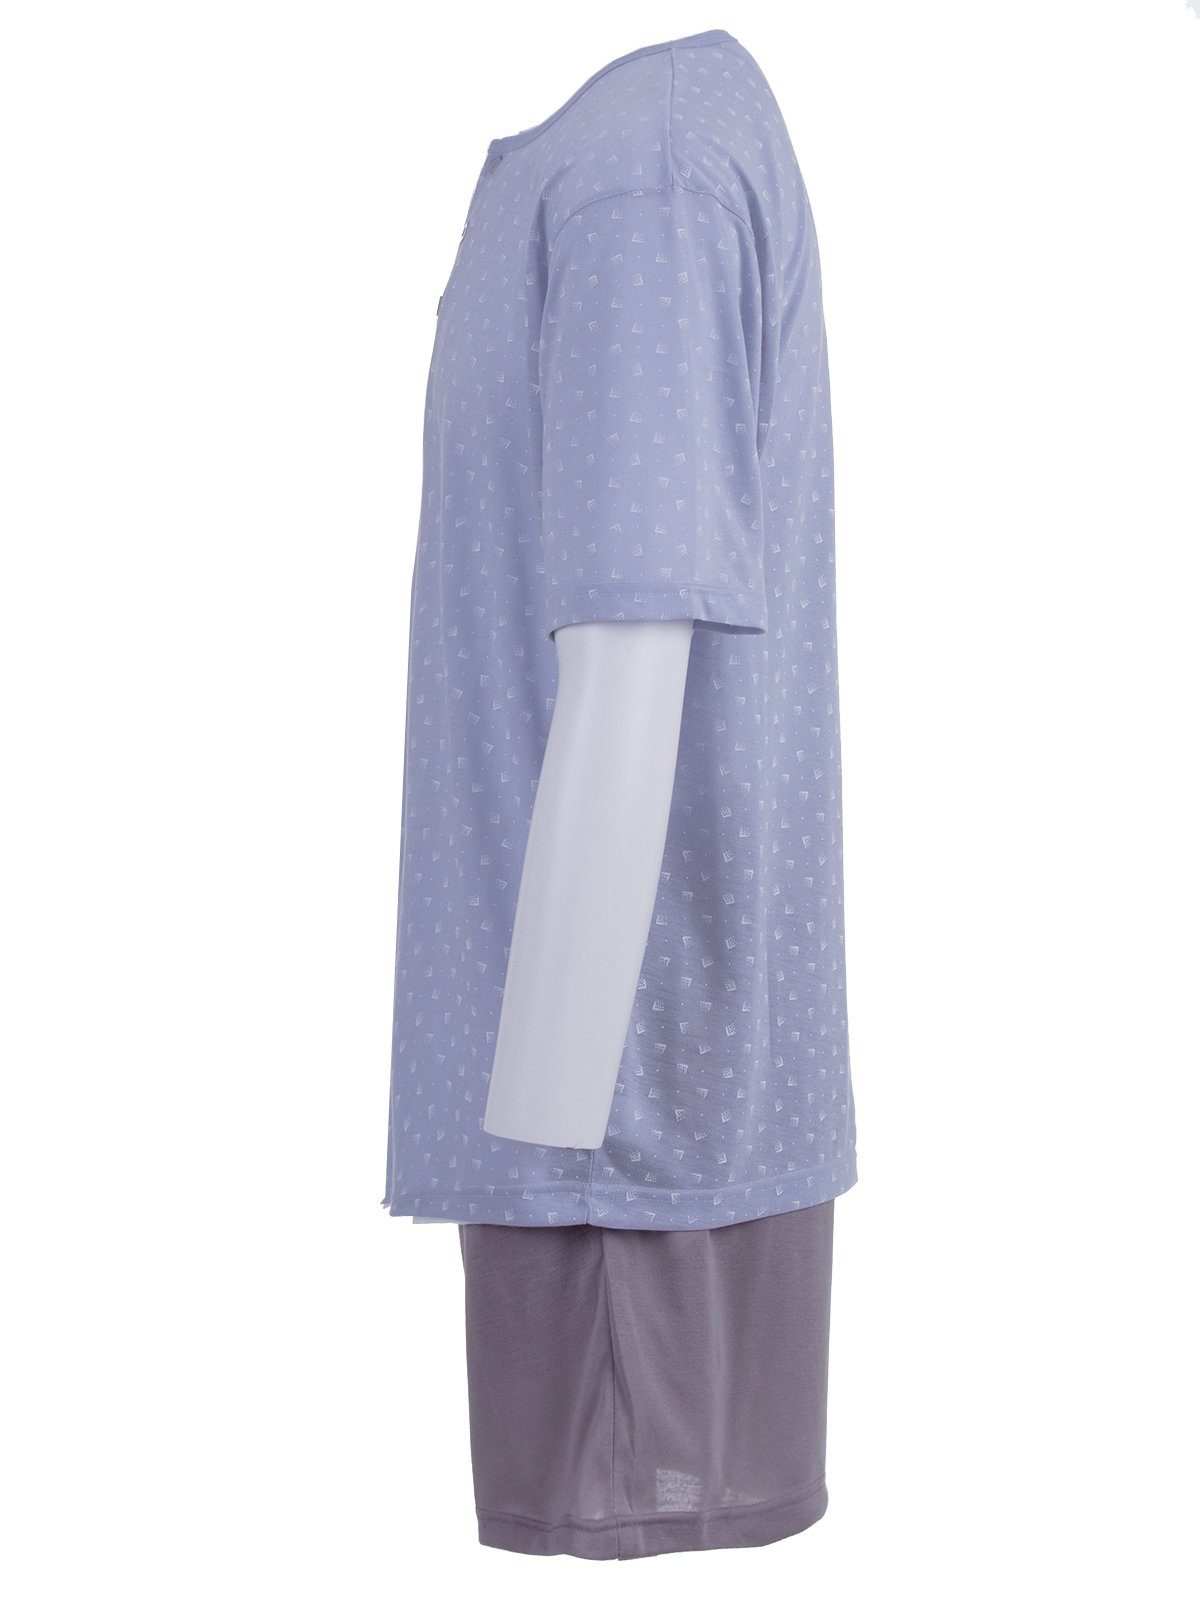 Shorty Rechteck - Knöpfe Schlafanzug Set Pyjama Lucky grau